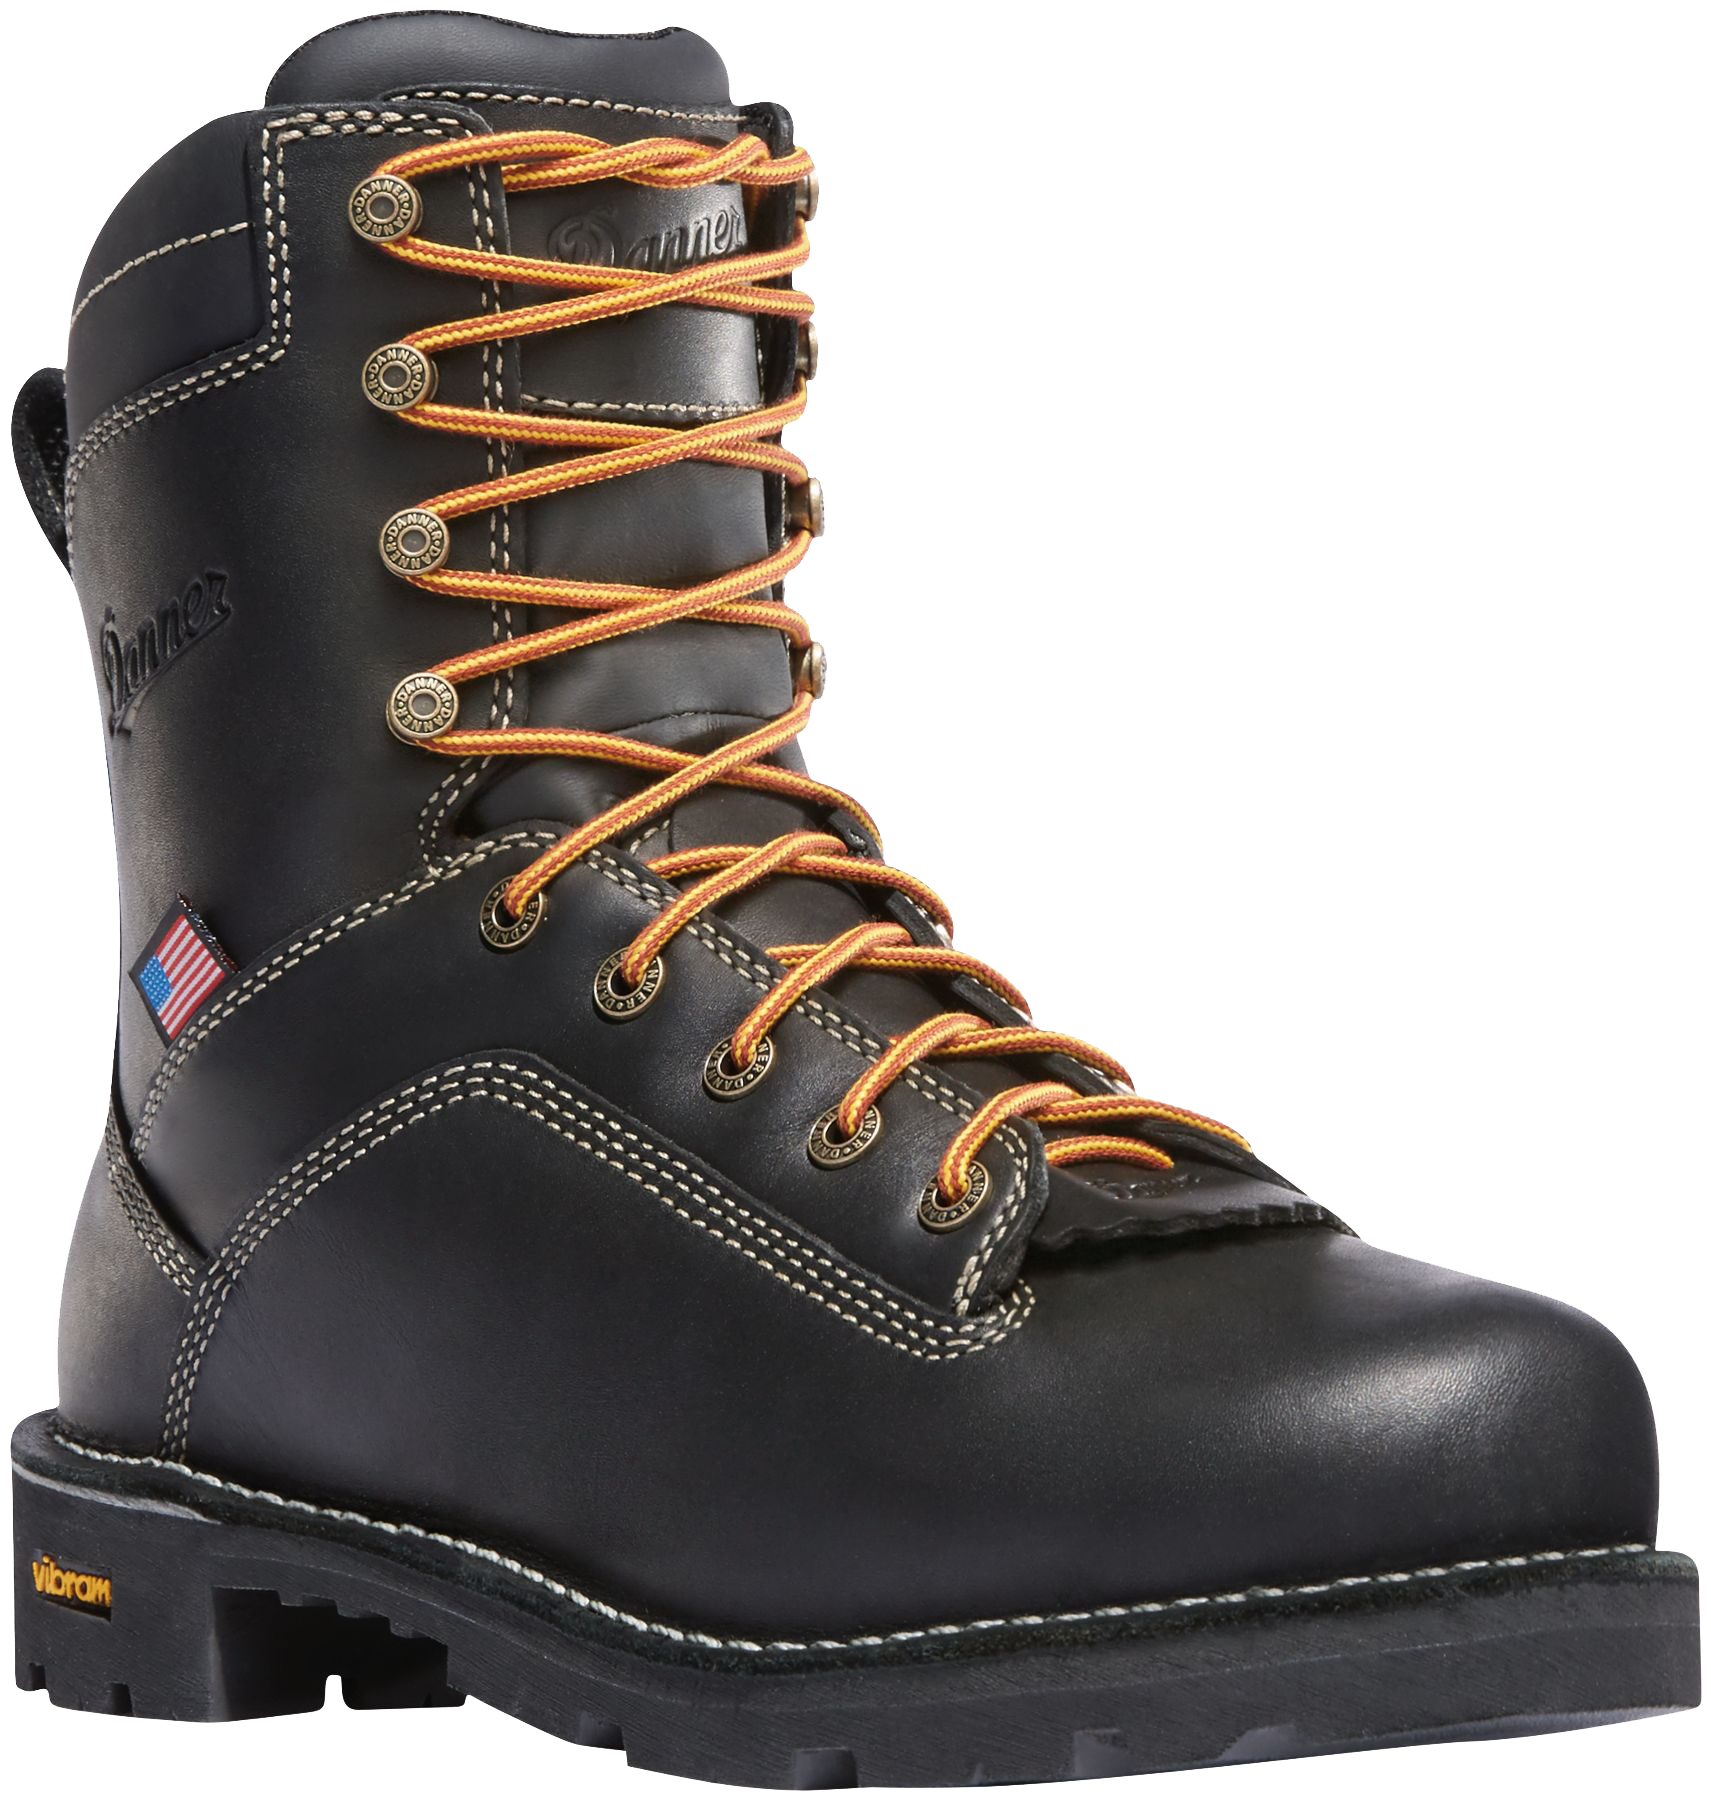 Danner Quarry USA GORE-TEX Work Boots for Men - Black - 11M